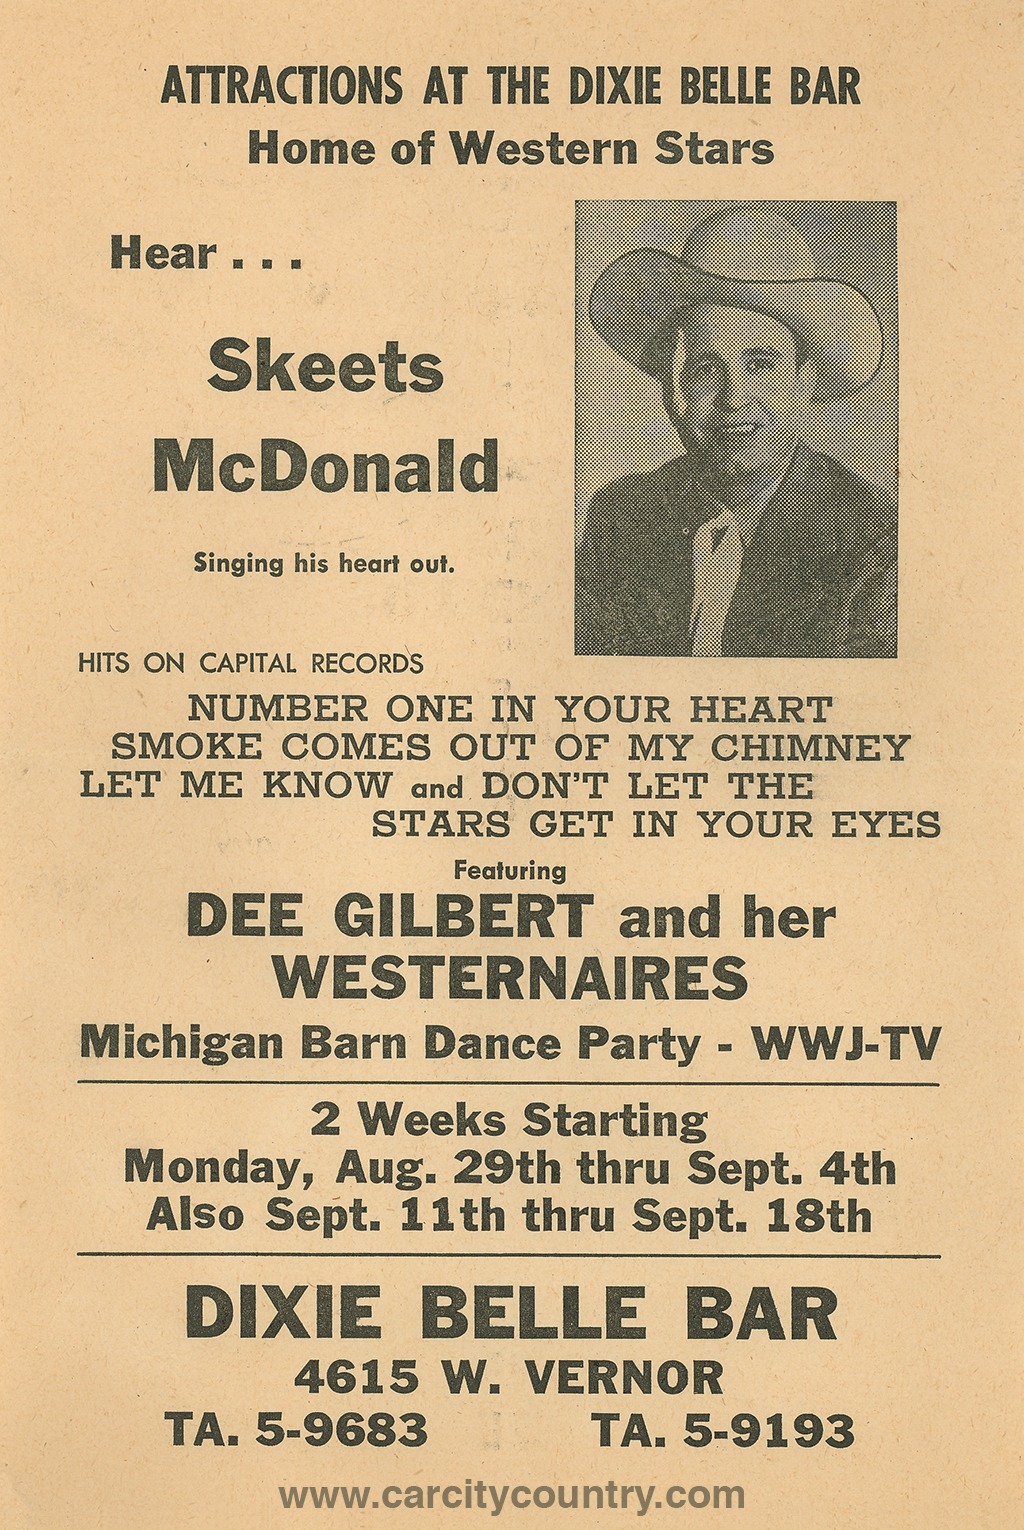 1954 handbill for Skeets McDonald at Dixie Belle Bar